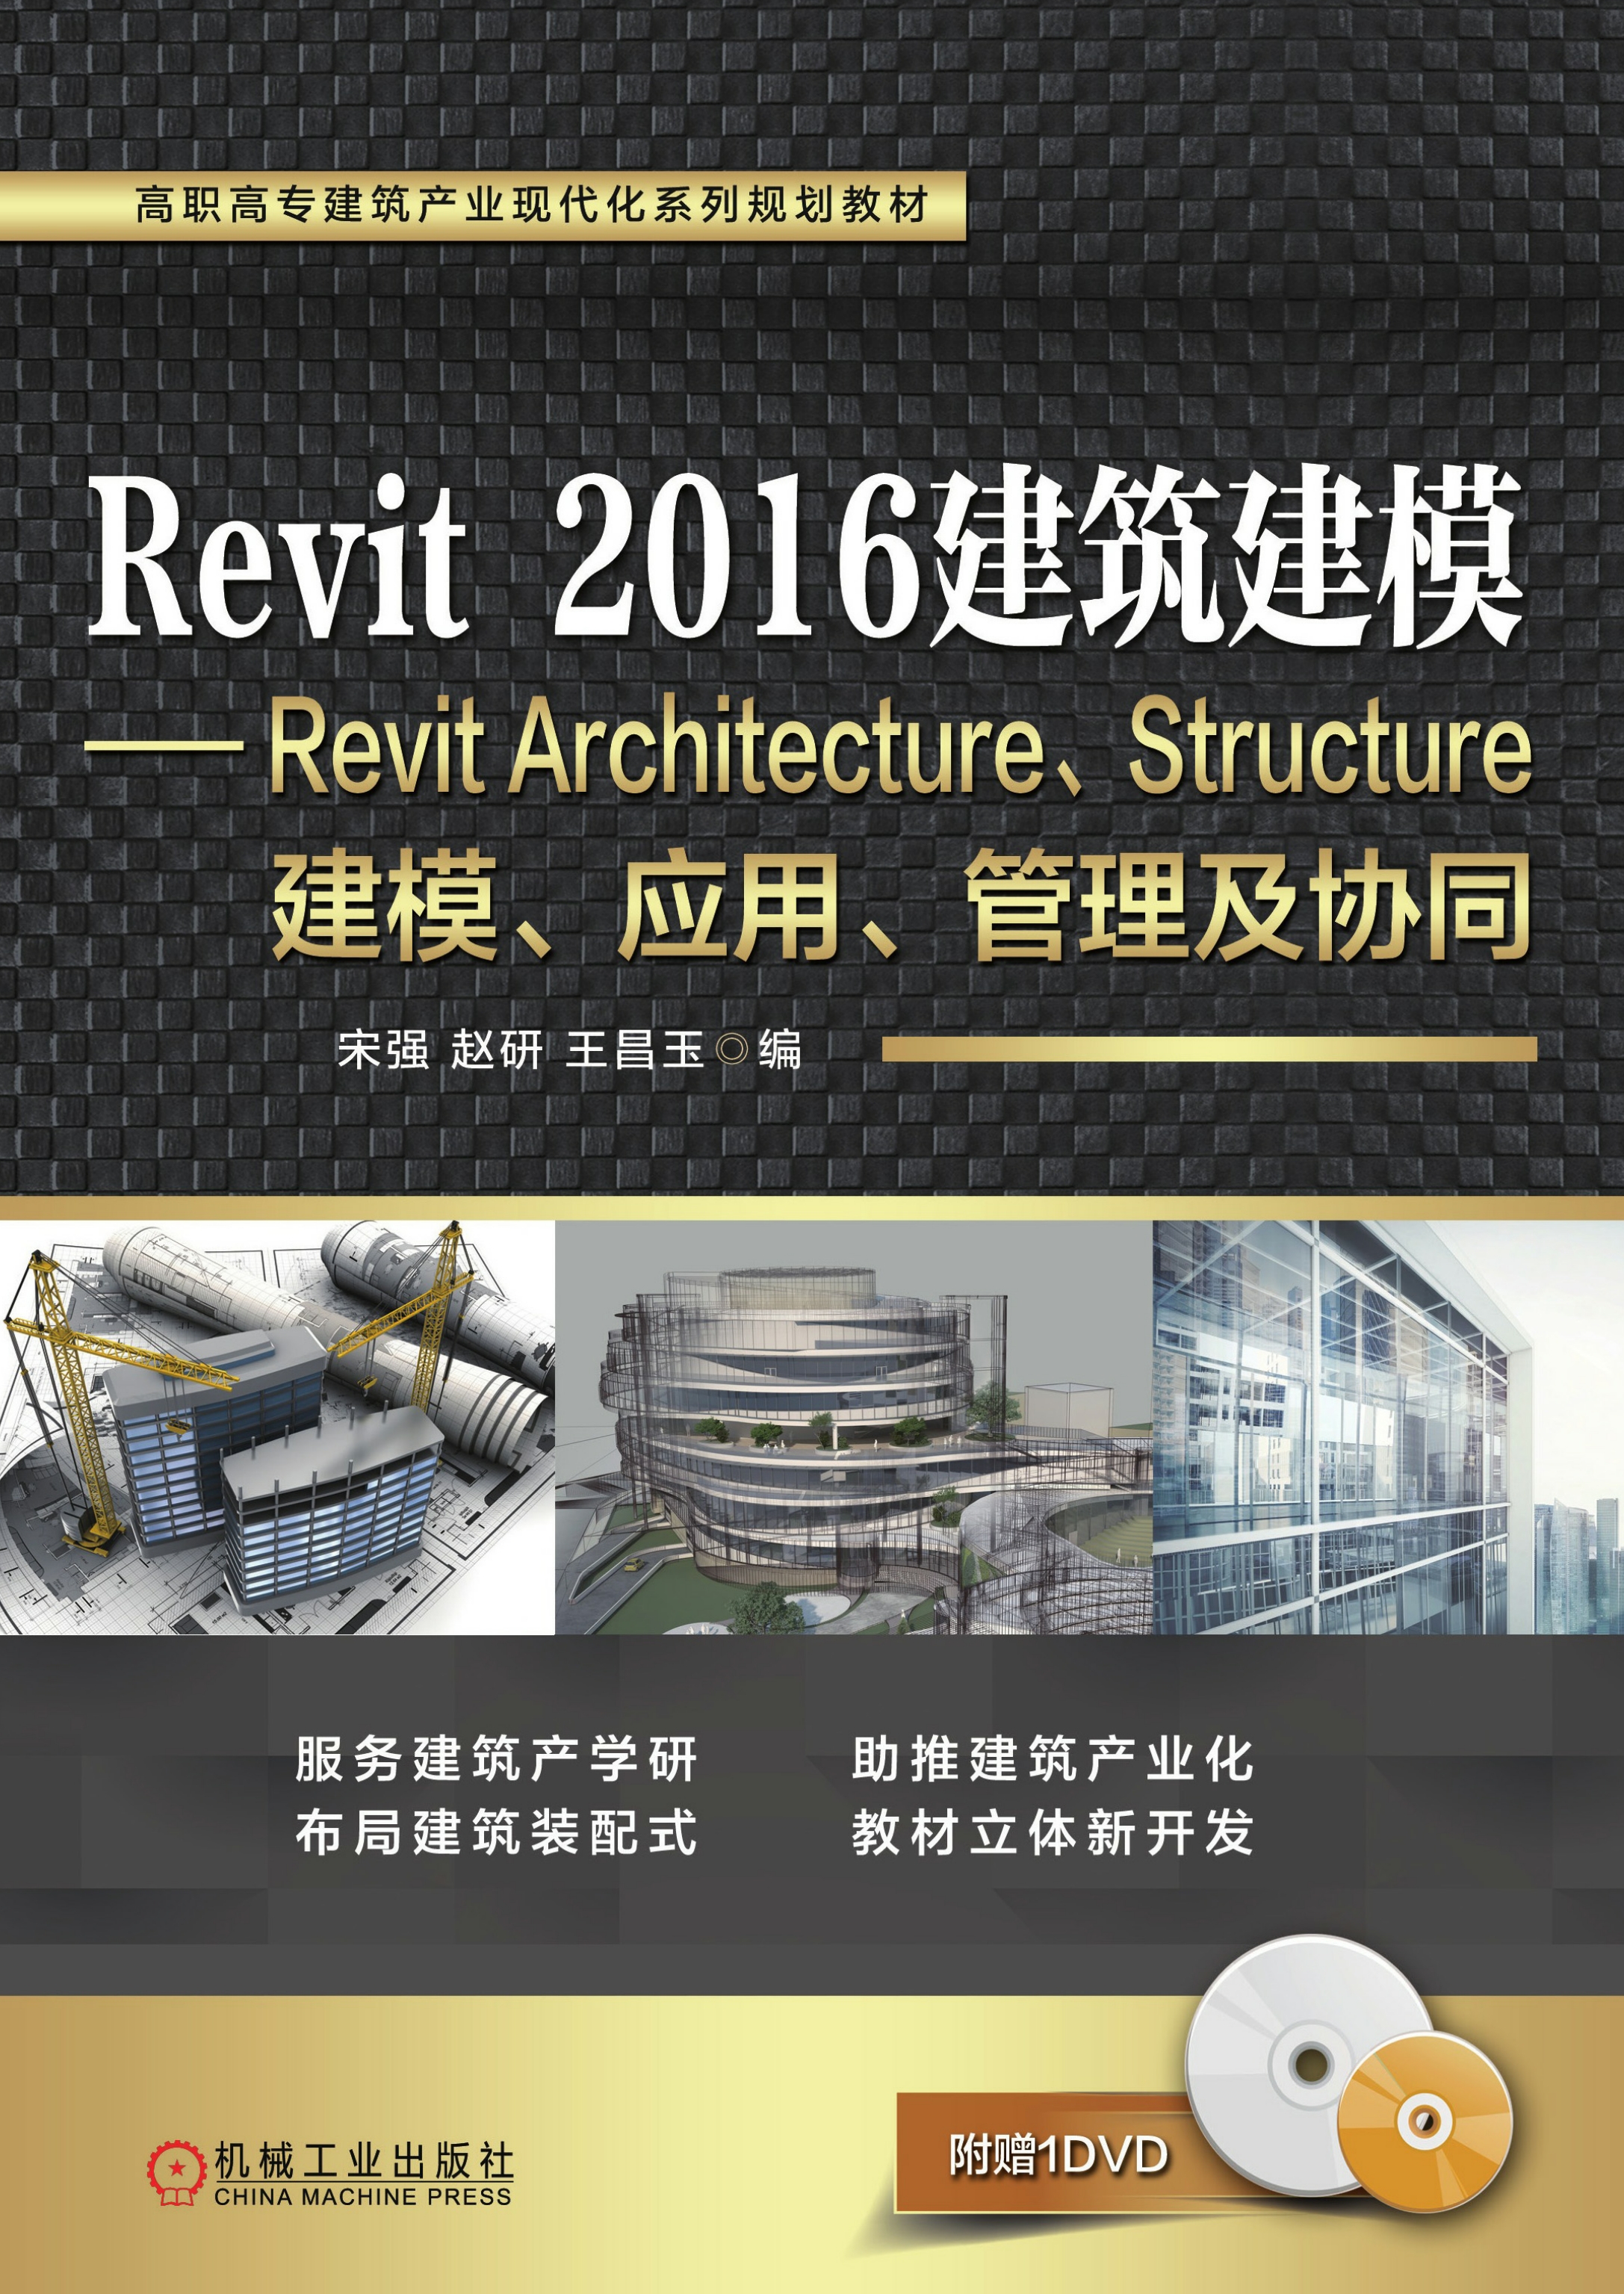 Revit 2016 建筑建模